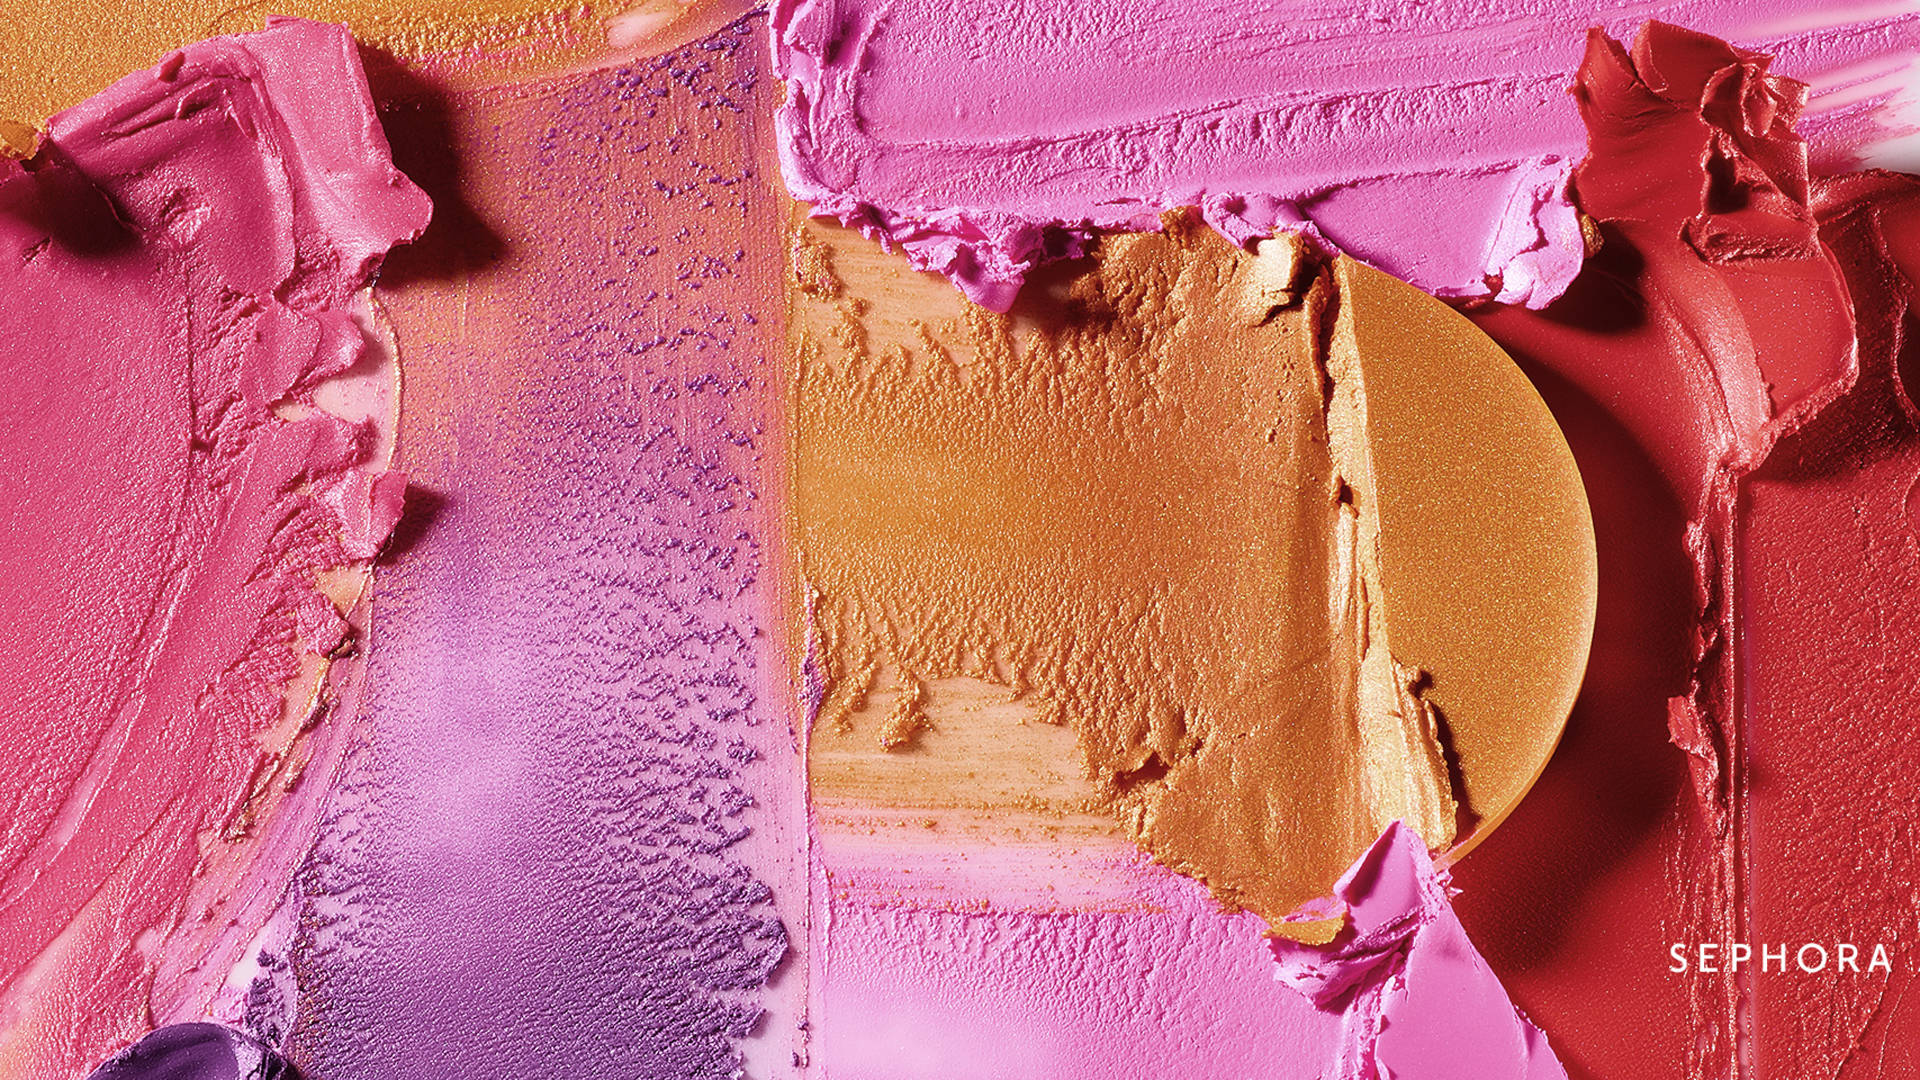 Sephora Læbestift Farveprøver Wallpaper